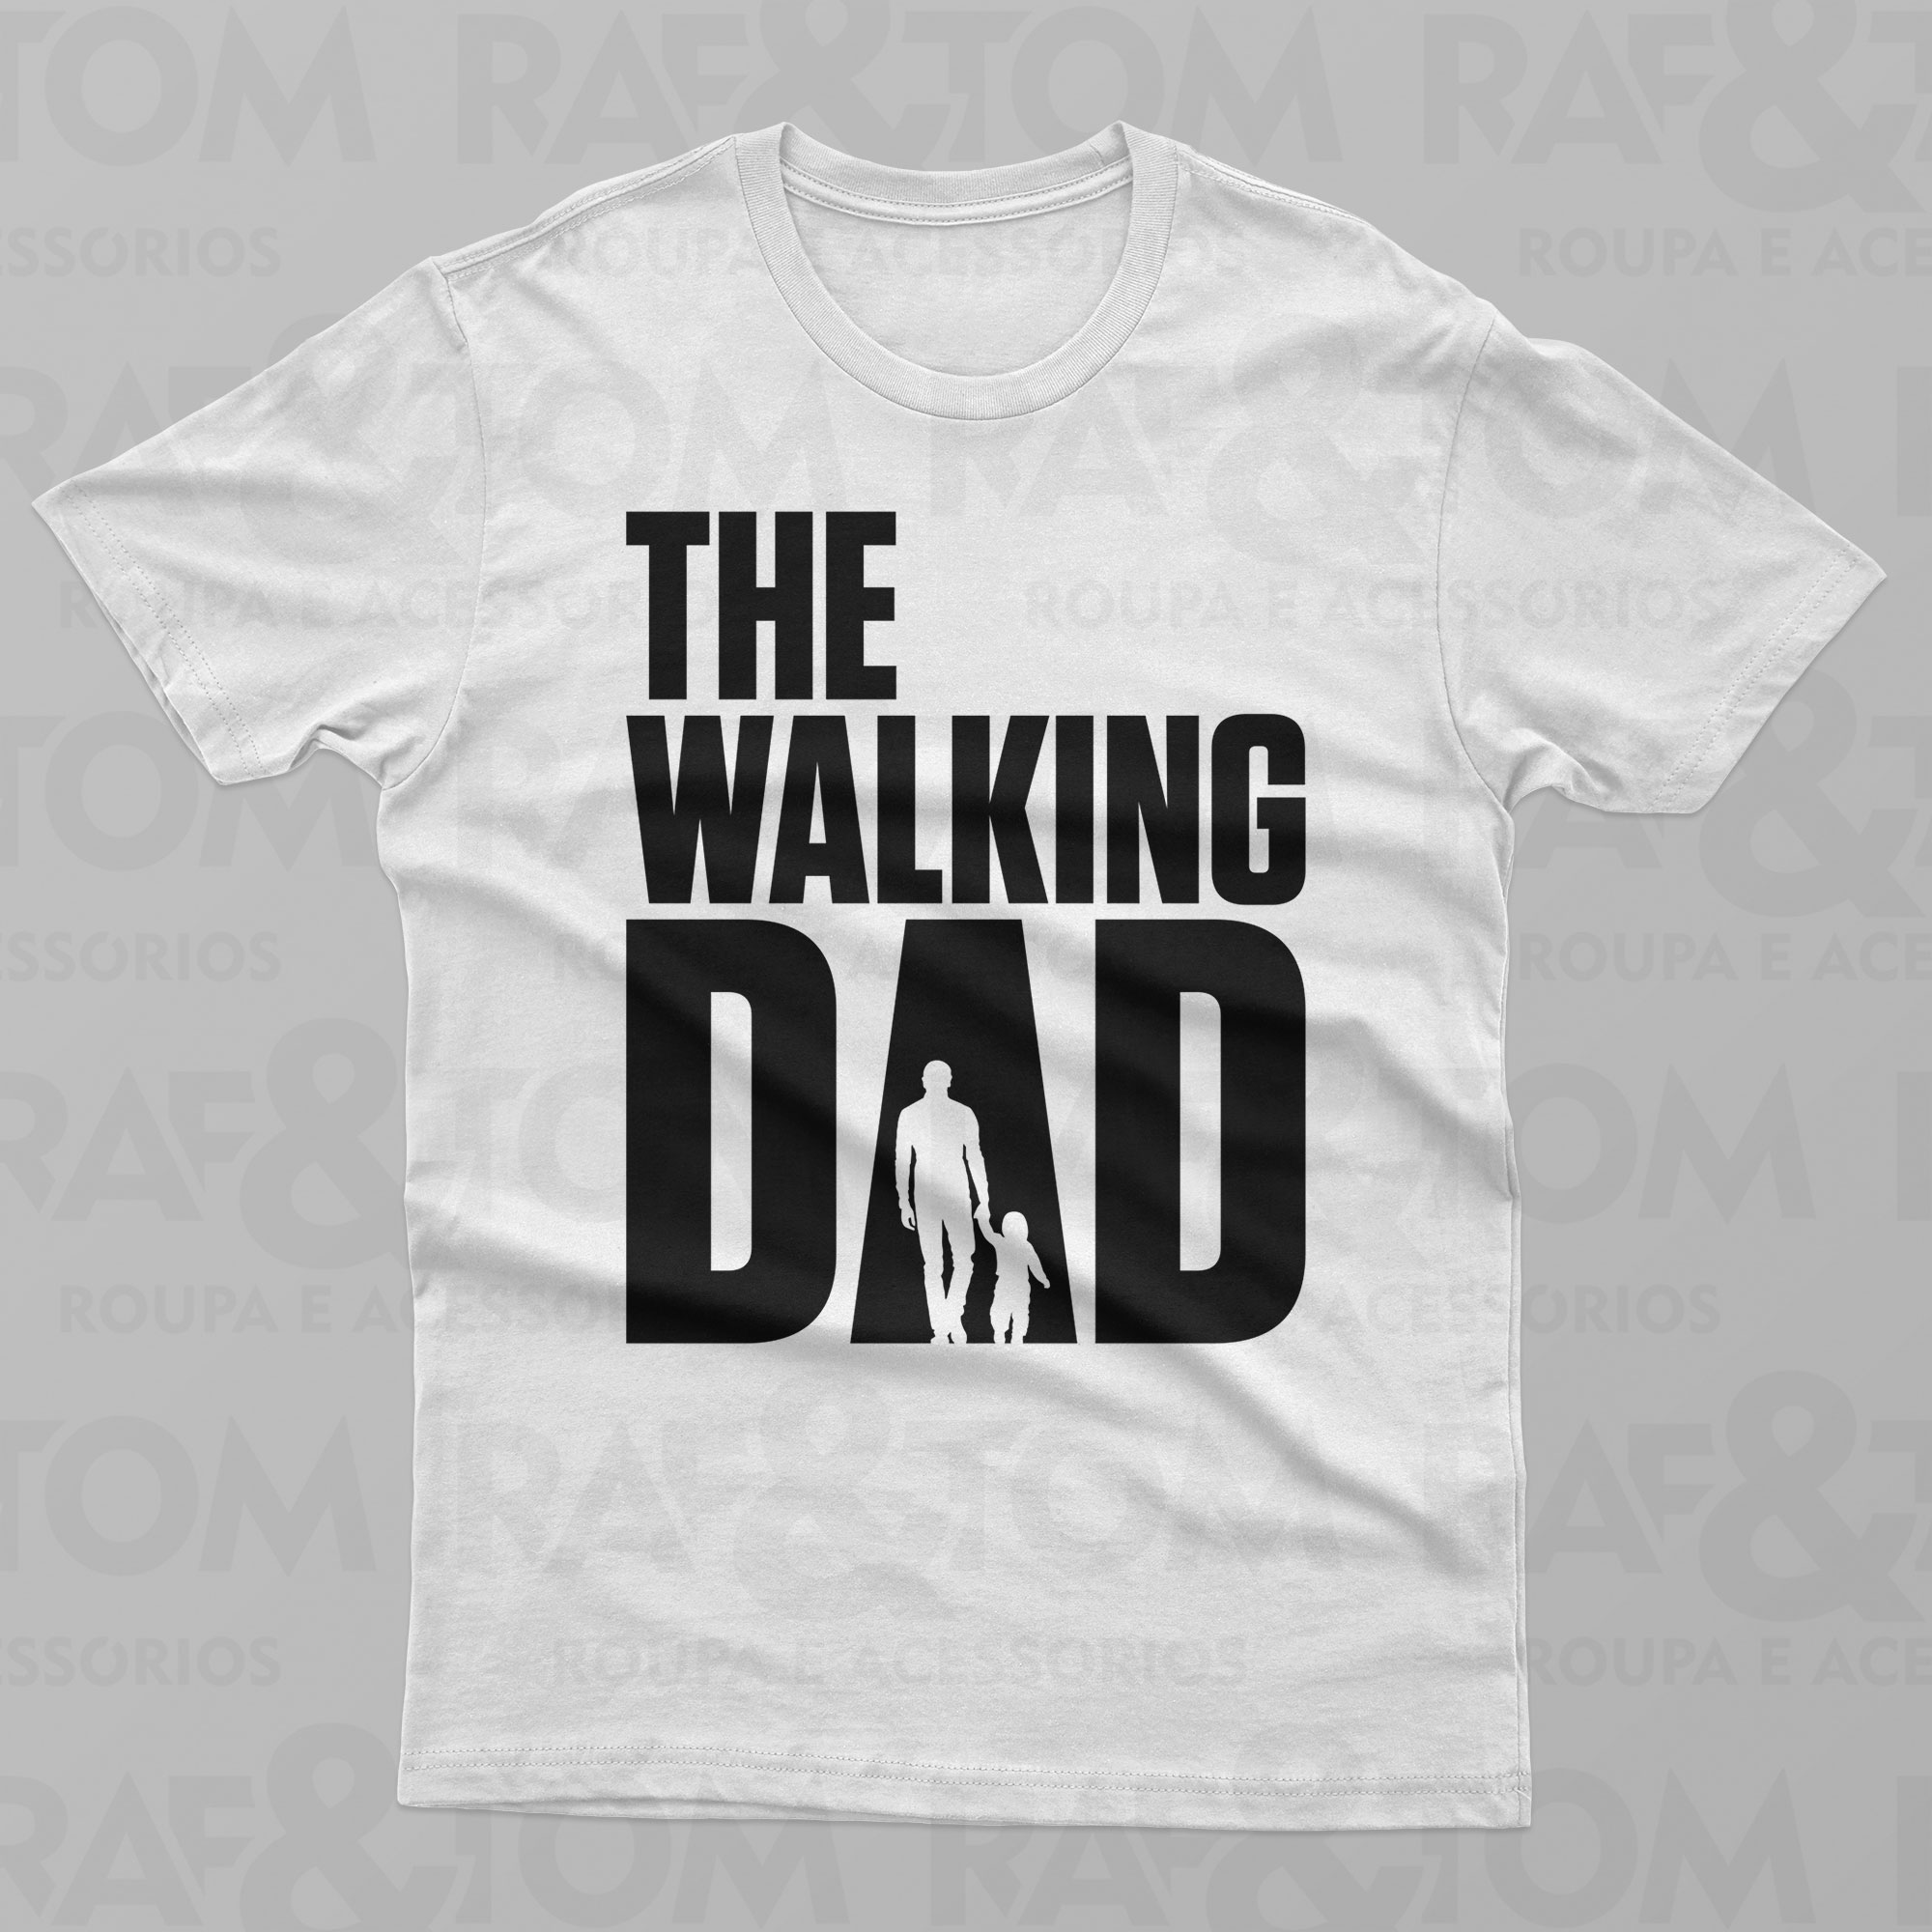 The Walking Dad v1